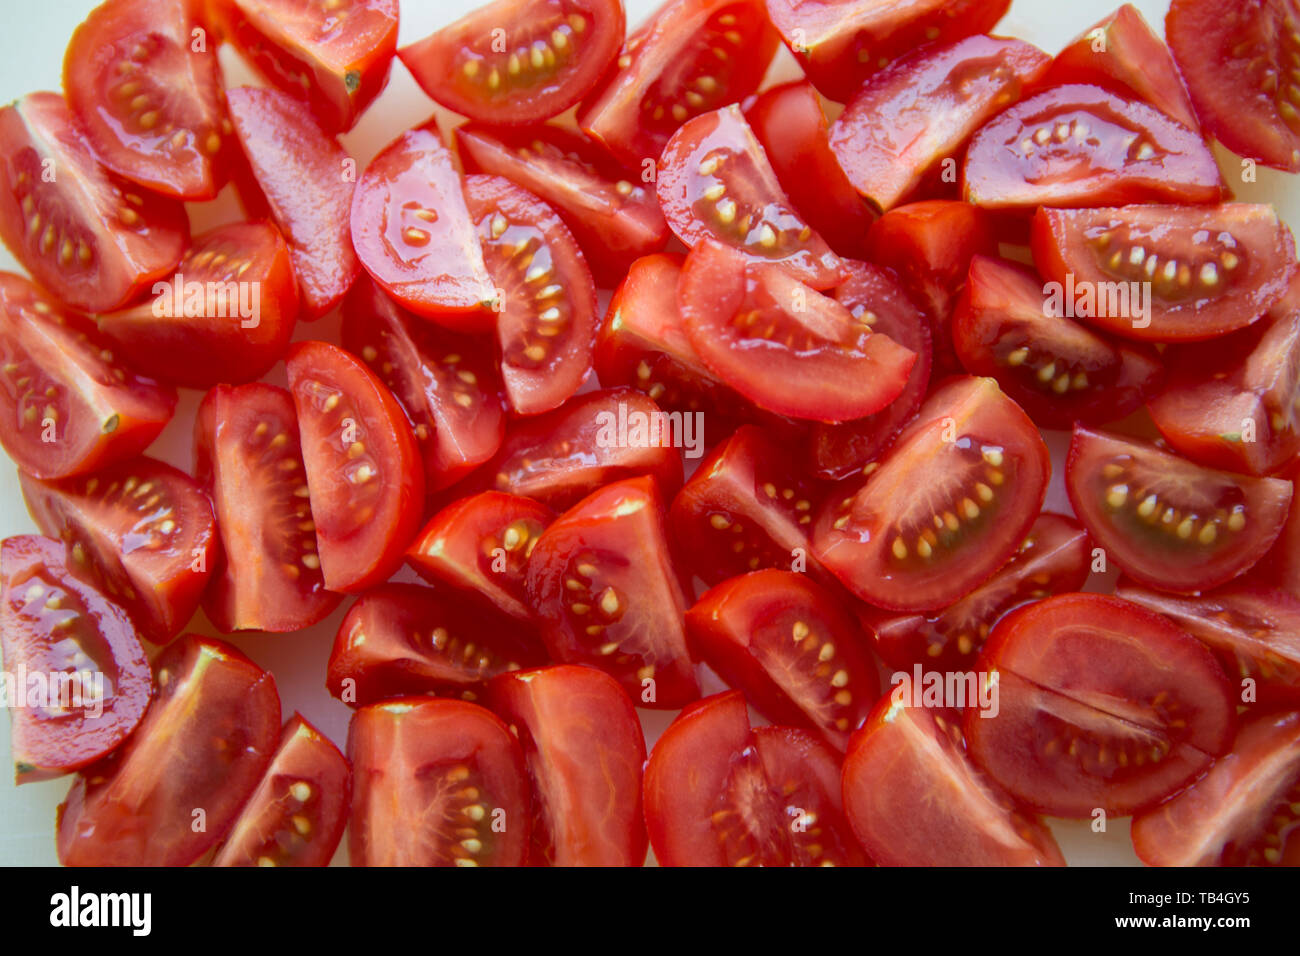 https://c8.alamy.com/compfr/tb4gy5/couper-les-tomates-tb4gy5.jpg